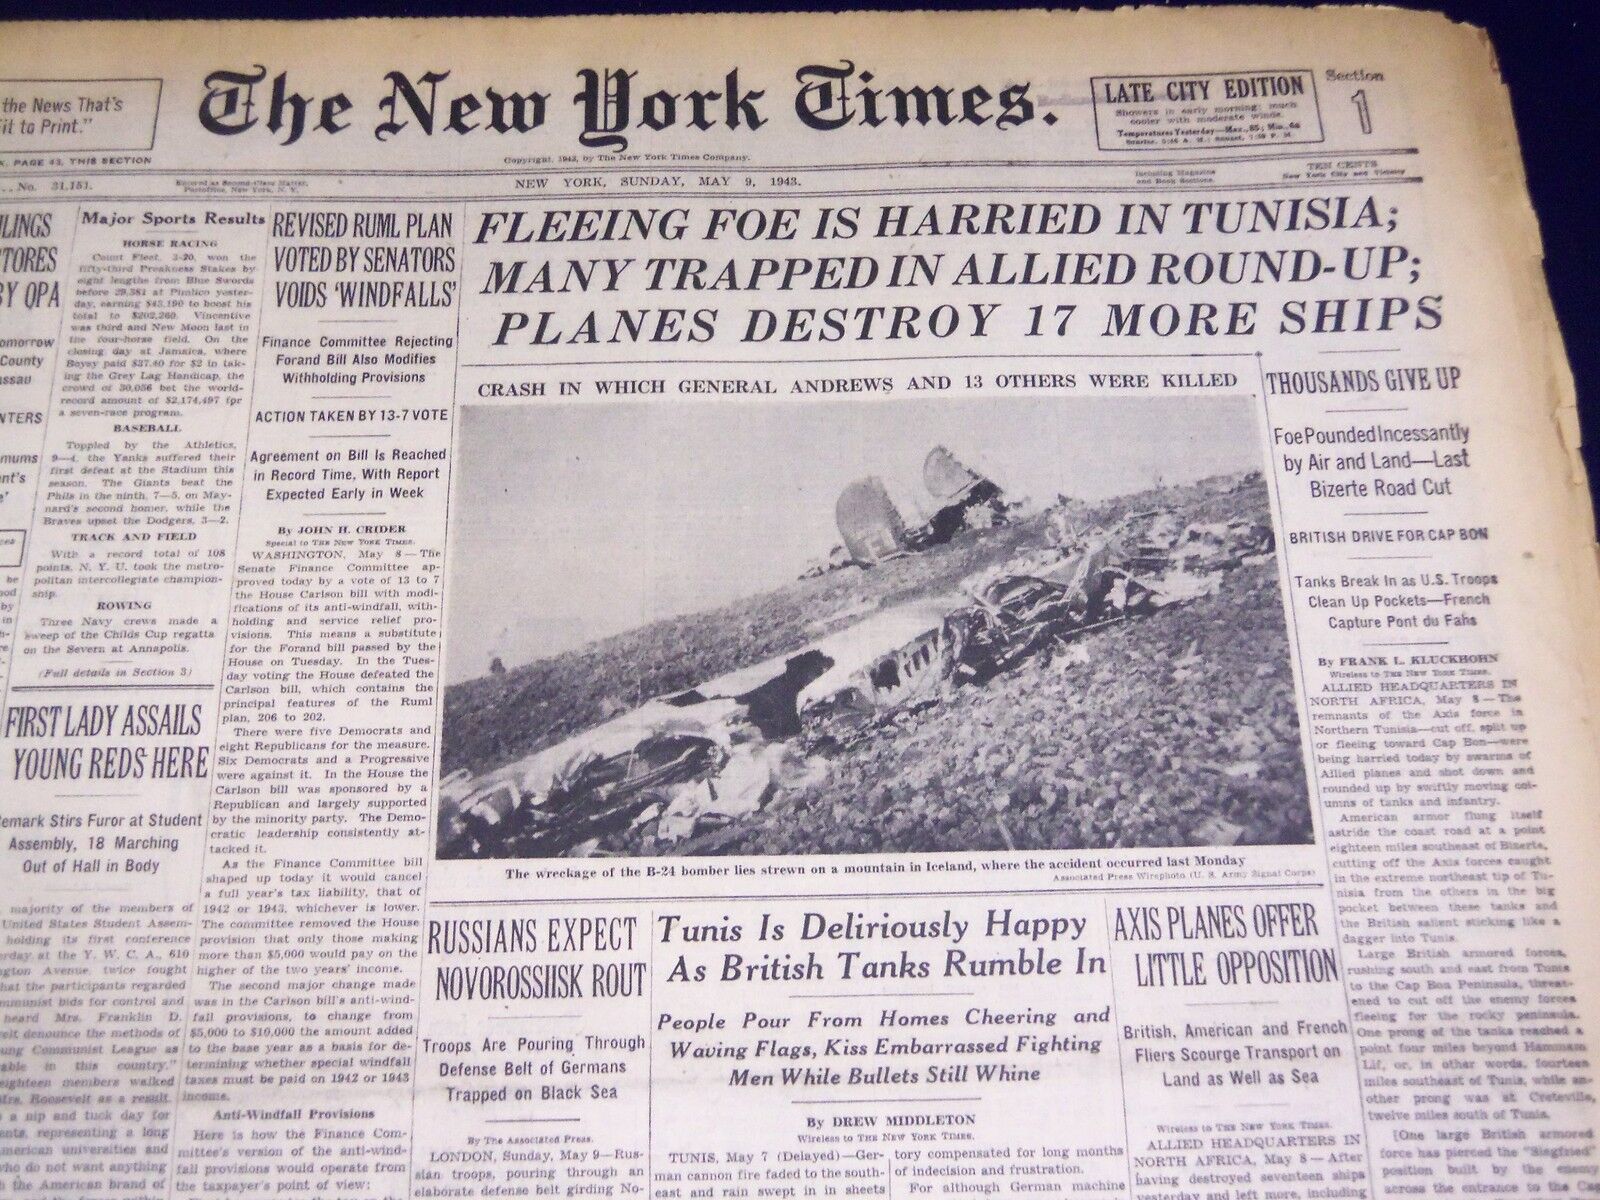 1943 MAY 9 NEW YORK TIMES - FLEEING FOE IS HARRIED IN TUNISIA - NT 1035